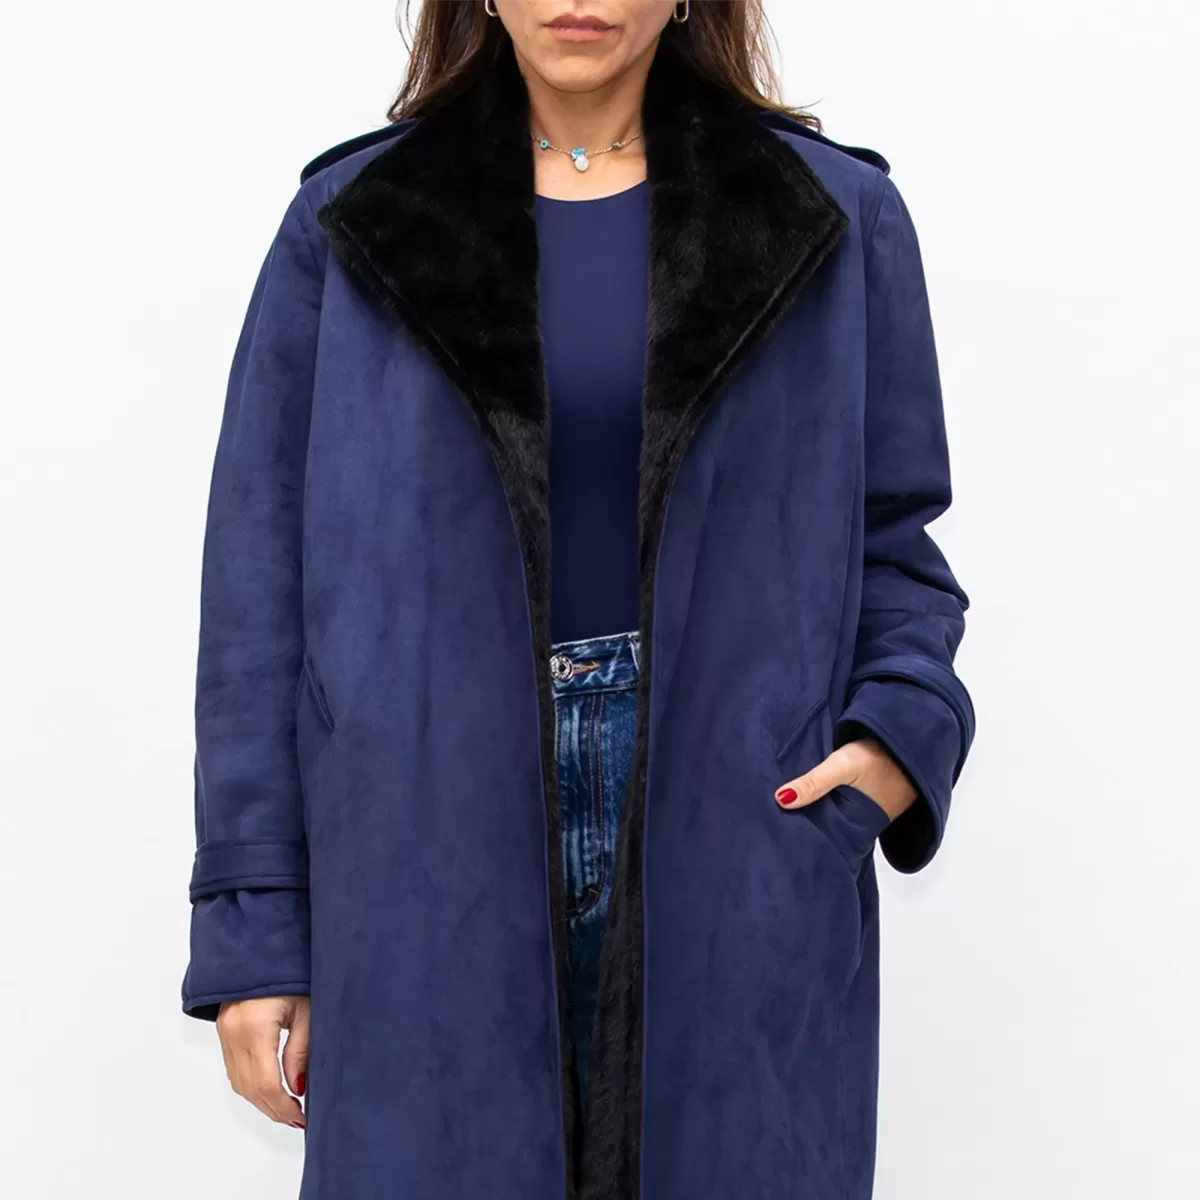 Navy Blue Fur Coat Suede with Fur lining Belted Jacket